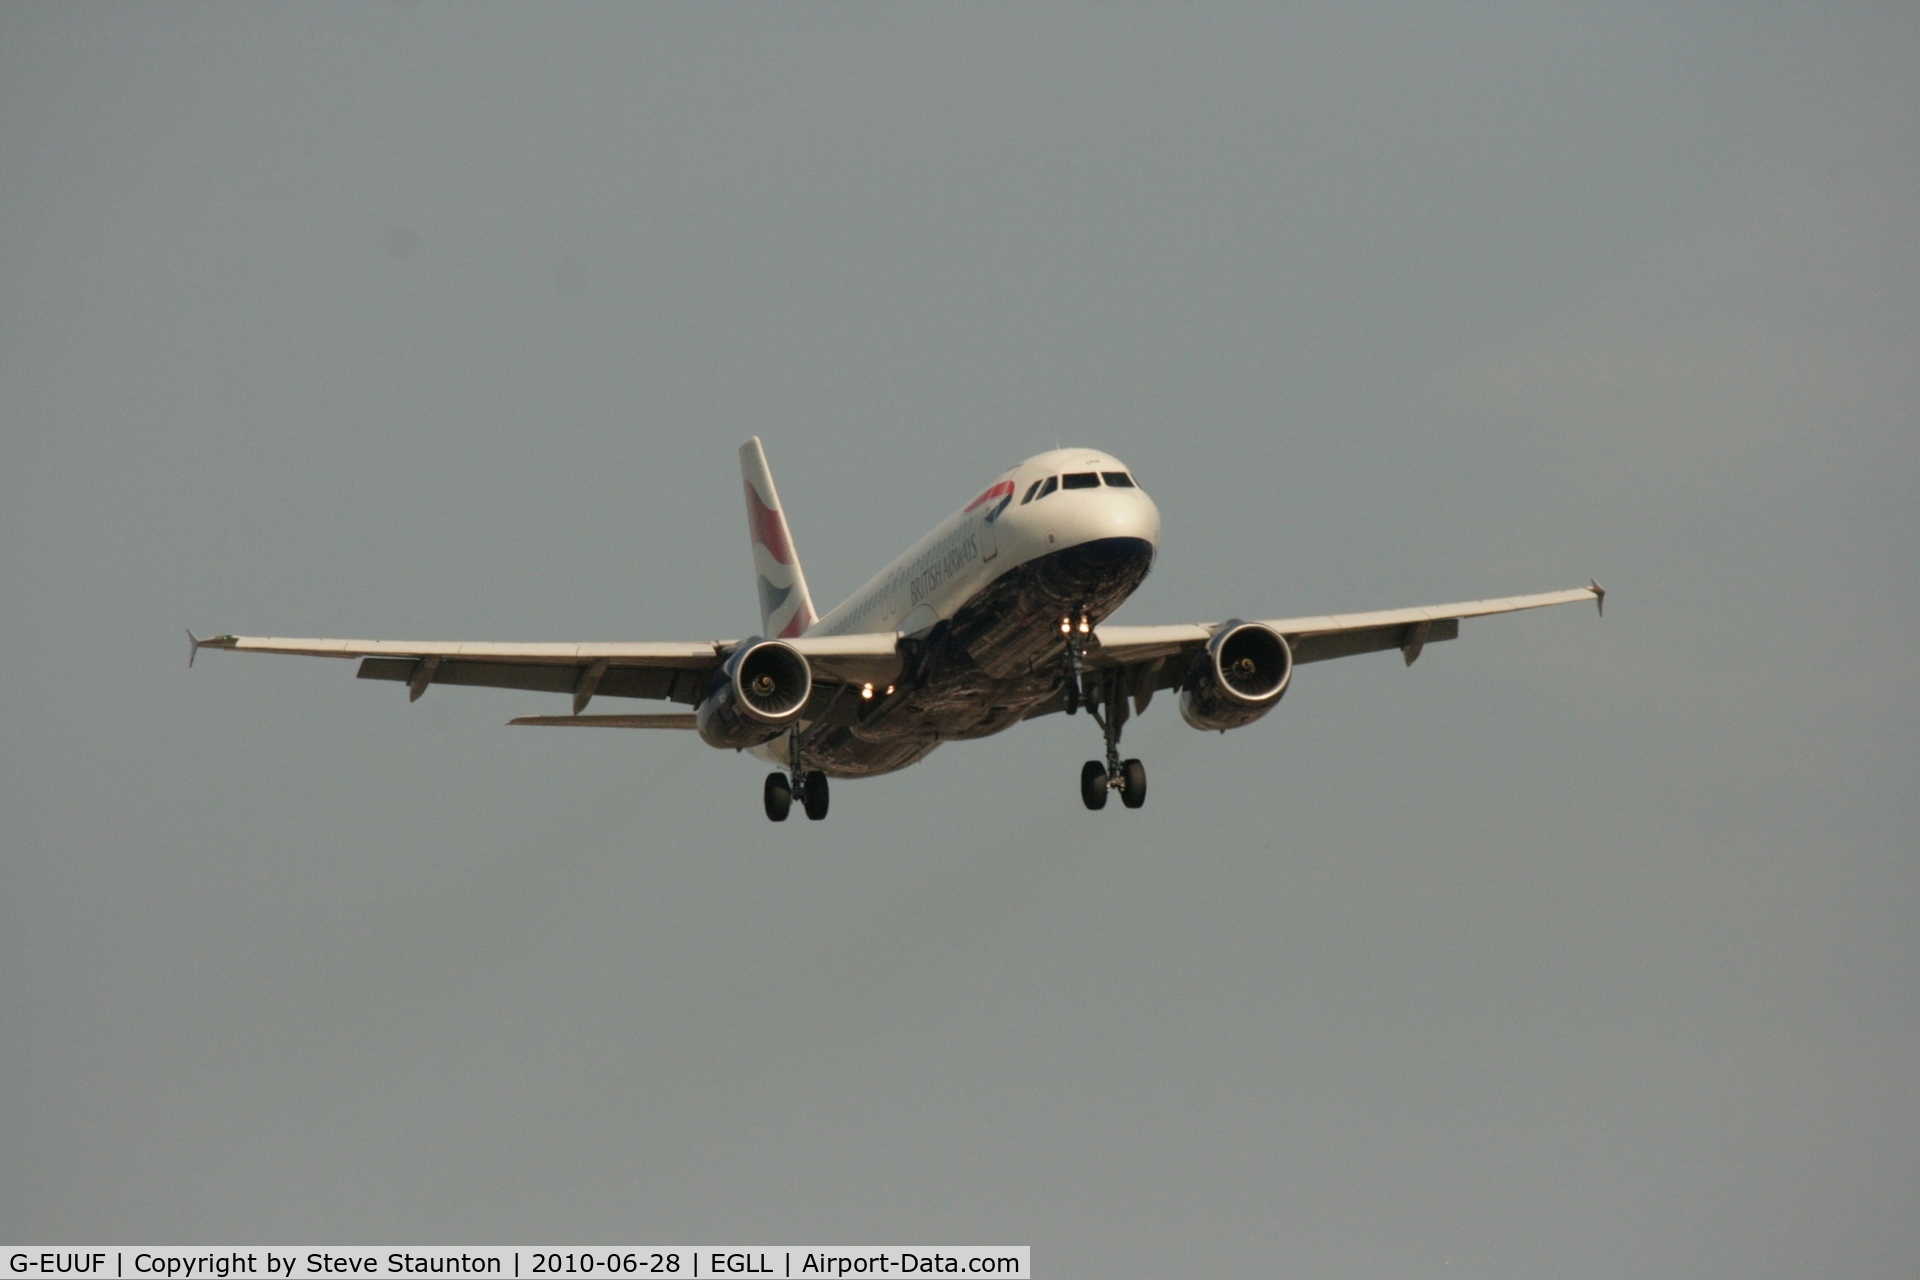 G-EUUF, 2002 Airbus A320-232 C/N 1814, Taken at Heathrow Airport, June 2010